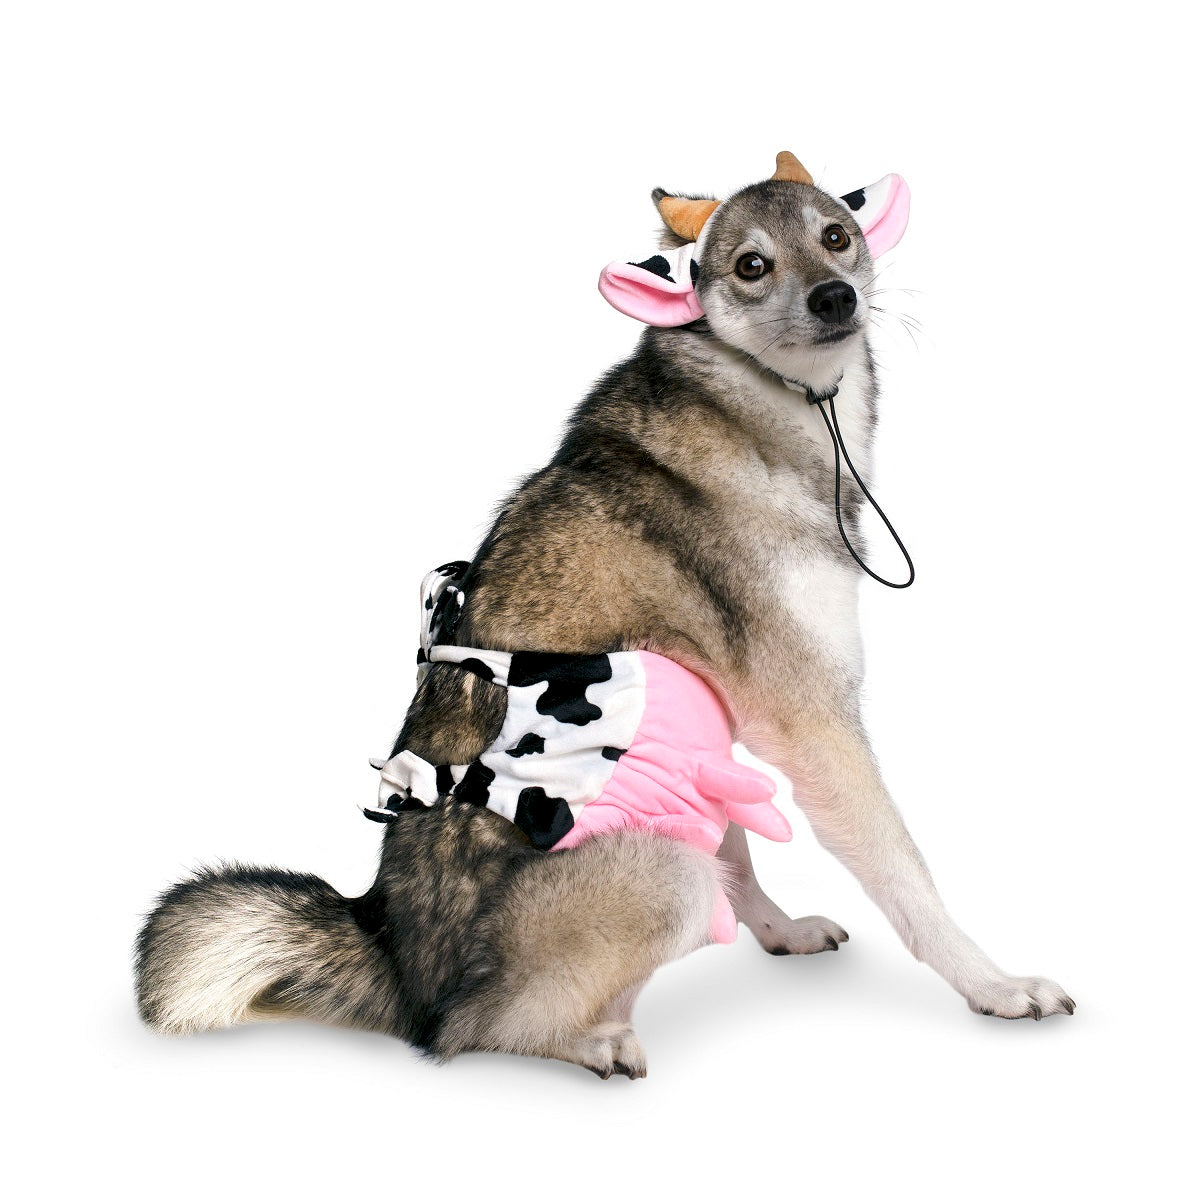 Midlee Cow Headband & Udder Dog Costume